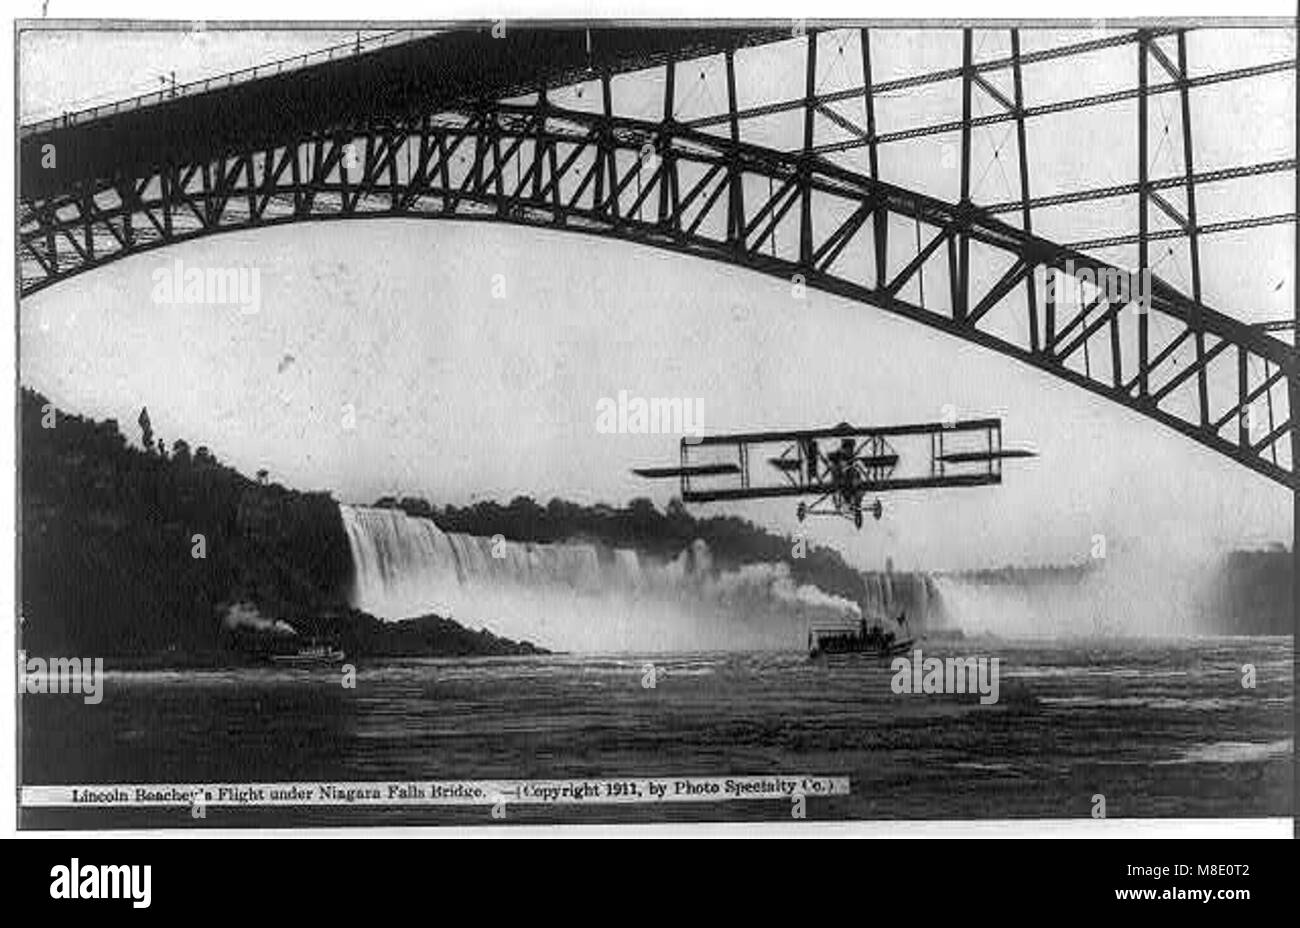 Lincoln Beachey's Flight under Niagara Falls Bridge LCCN2002721393 Stock Photo